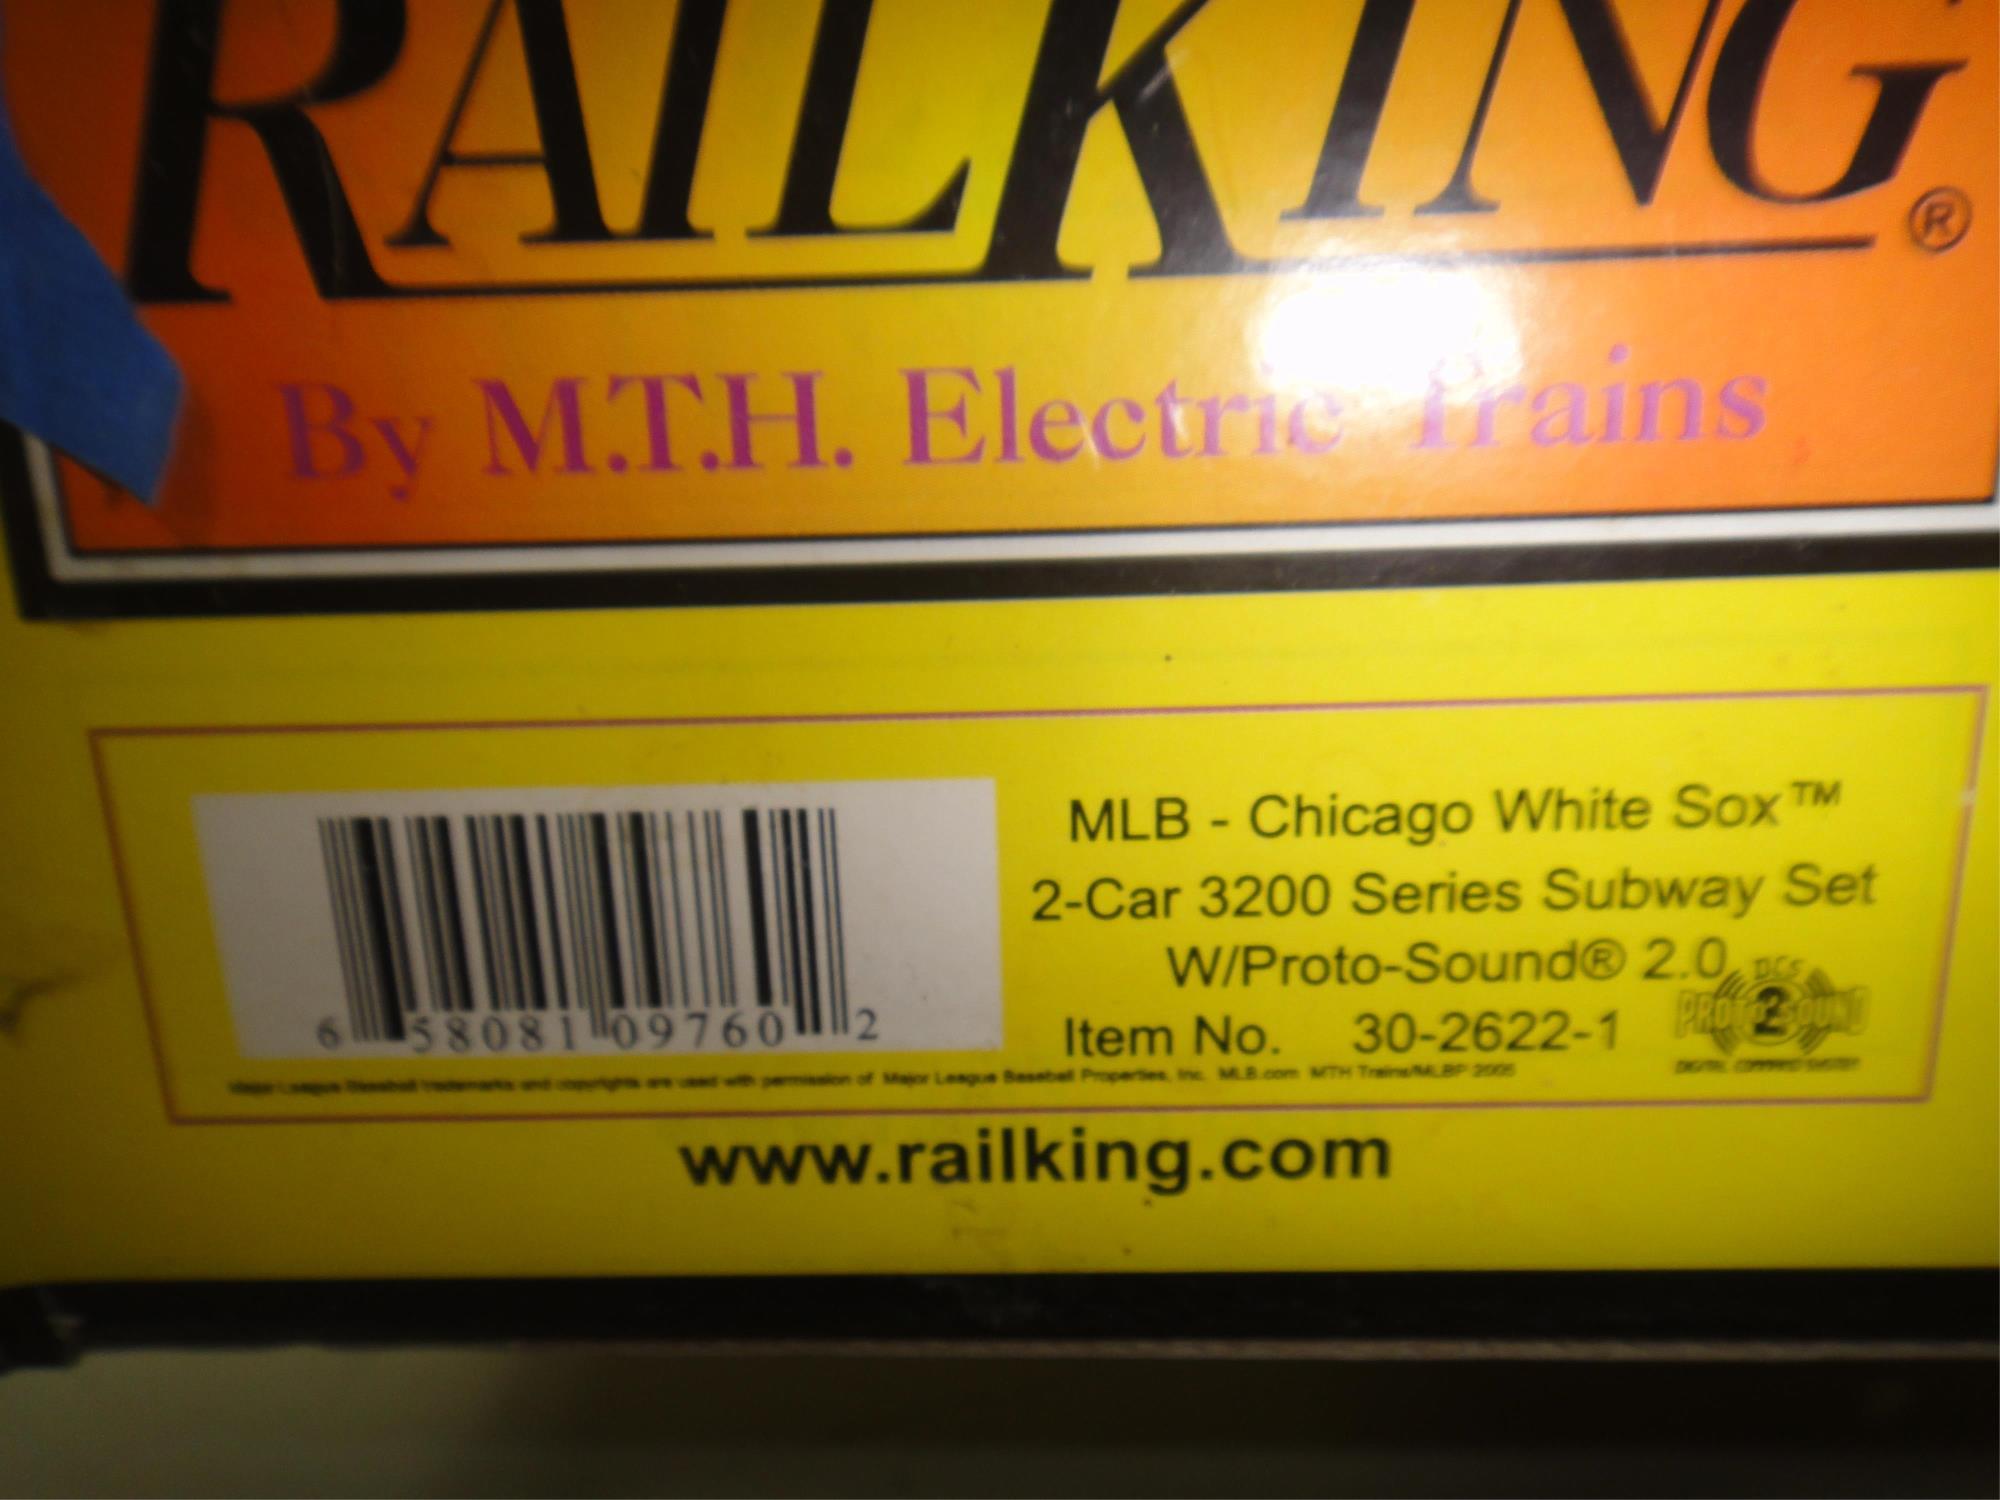 RAILKING CHICAGO WHITE SOX 4 CAR SUBWAY SET